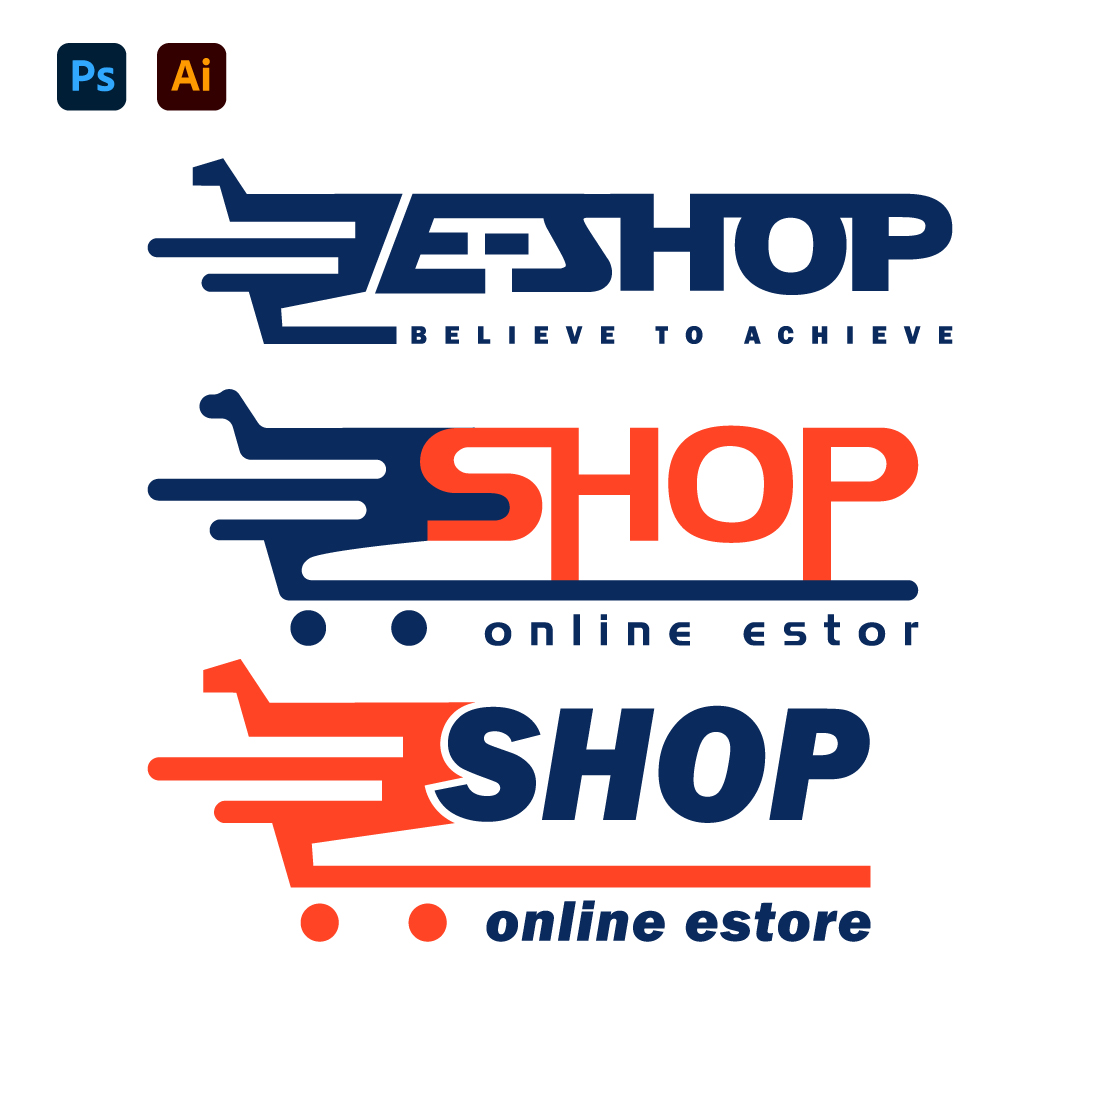 Online shop logo preview image.